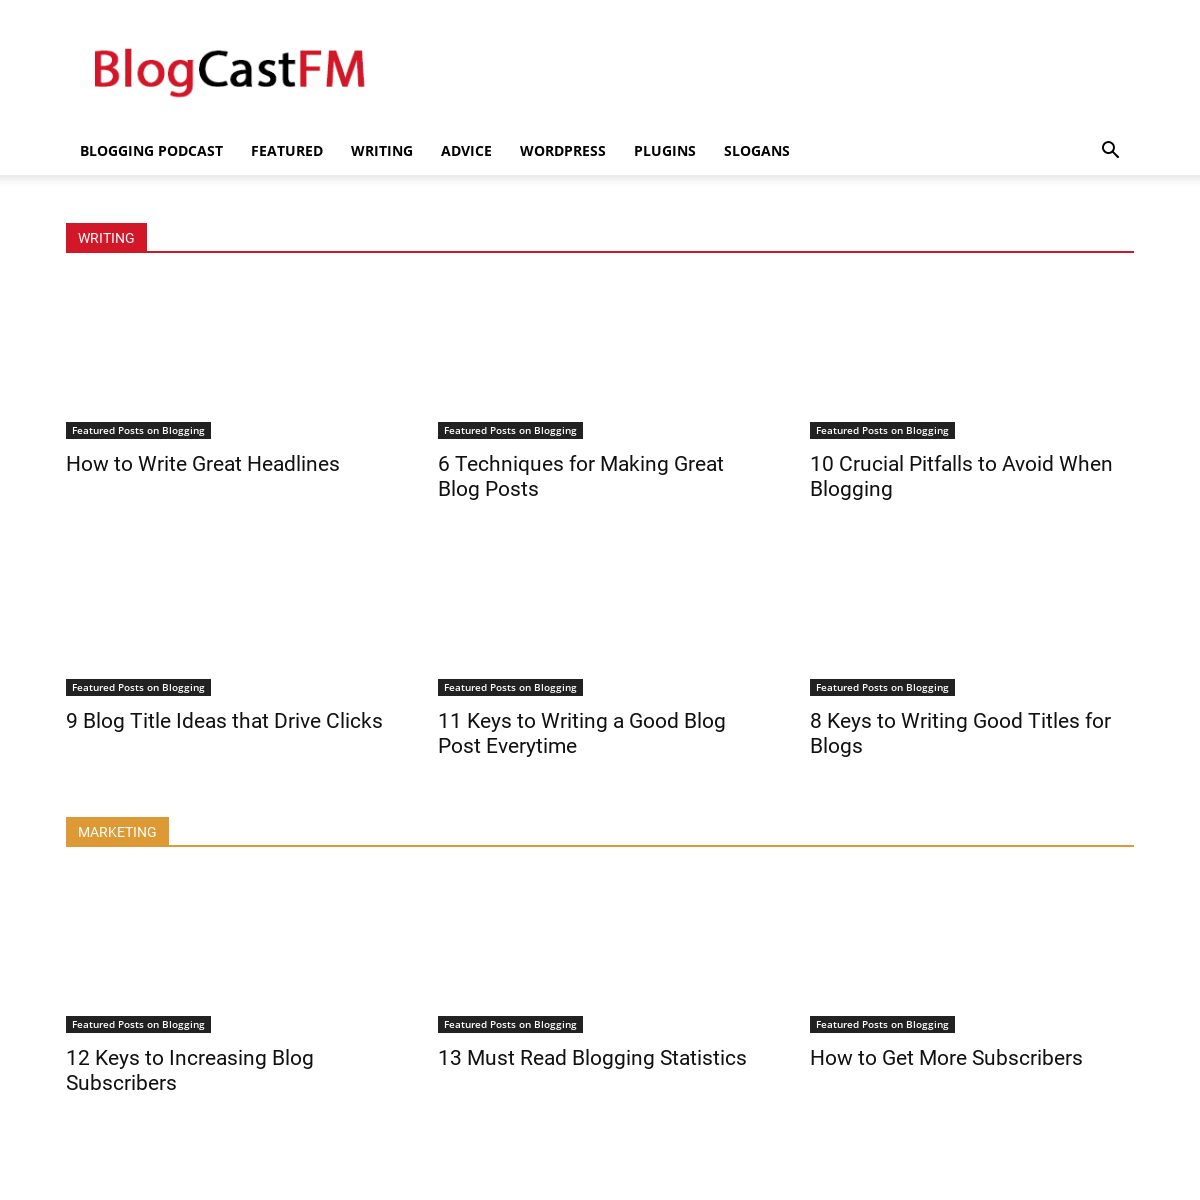 A complete backup of blogcastfm.com